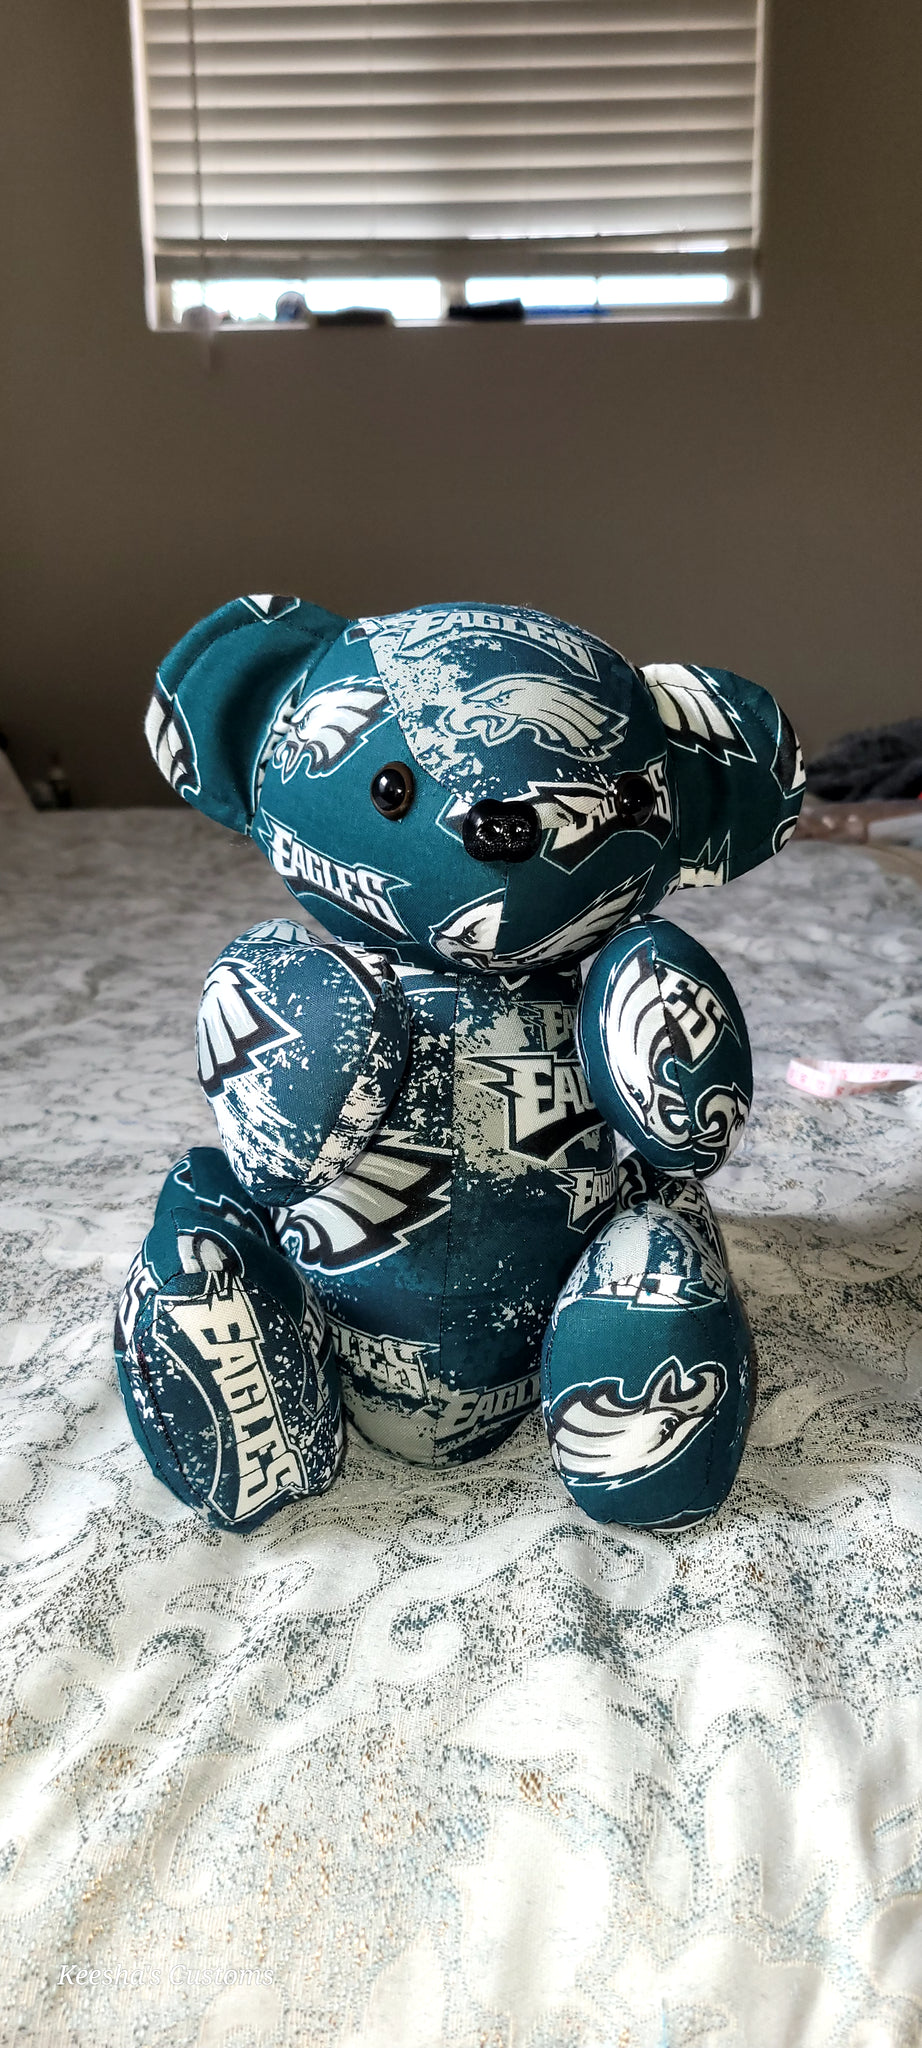 Hand sewn custom Bears